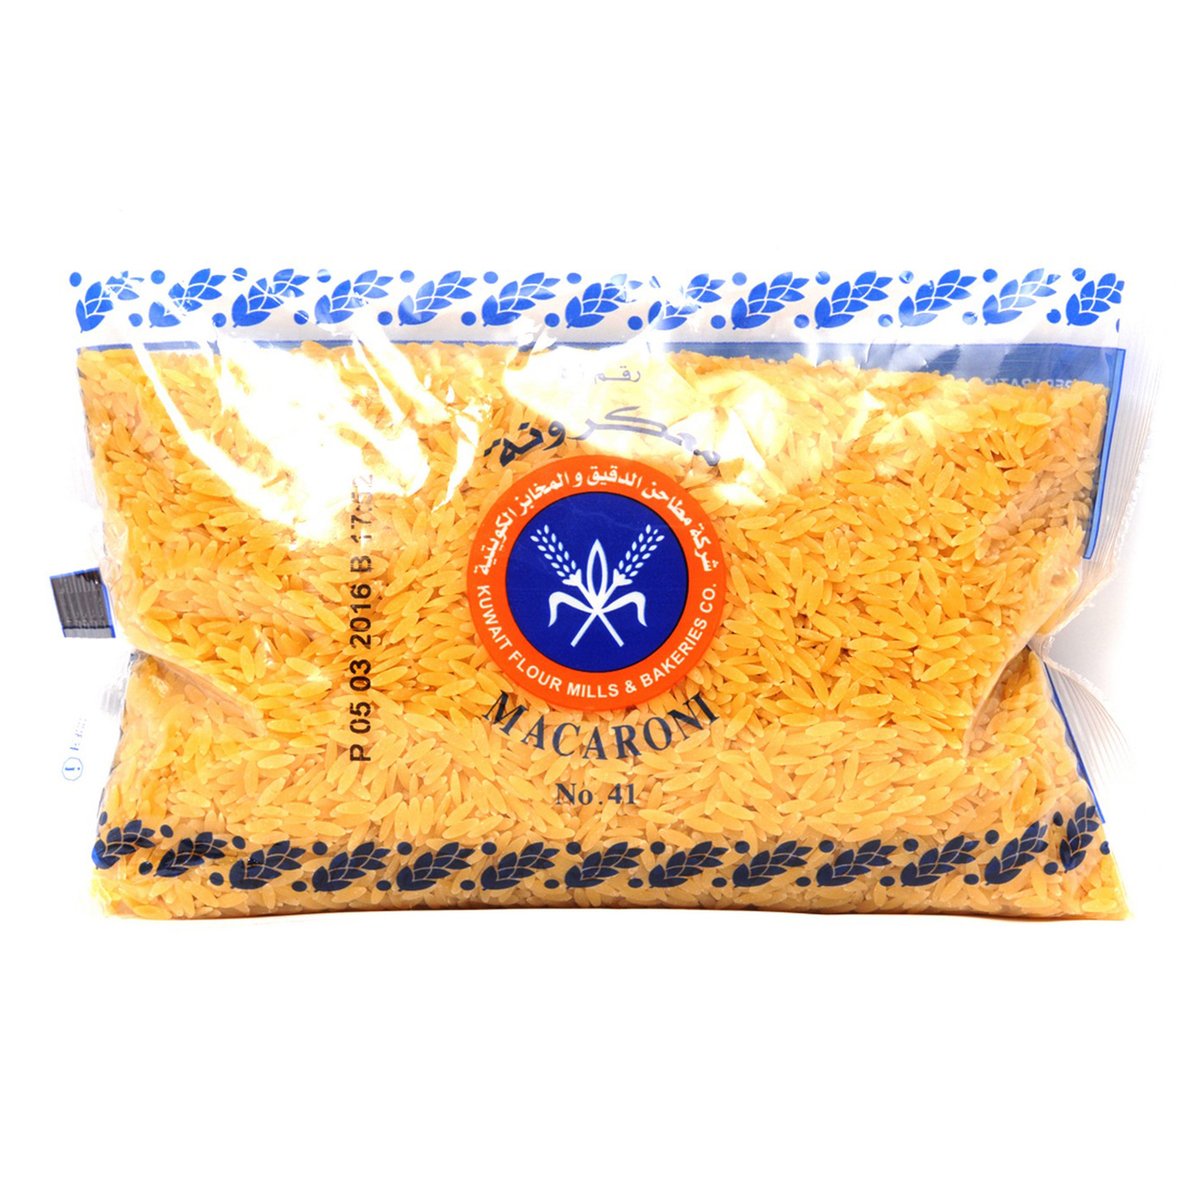 KFMBC Macaroni No.41 500 g